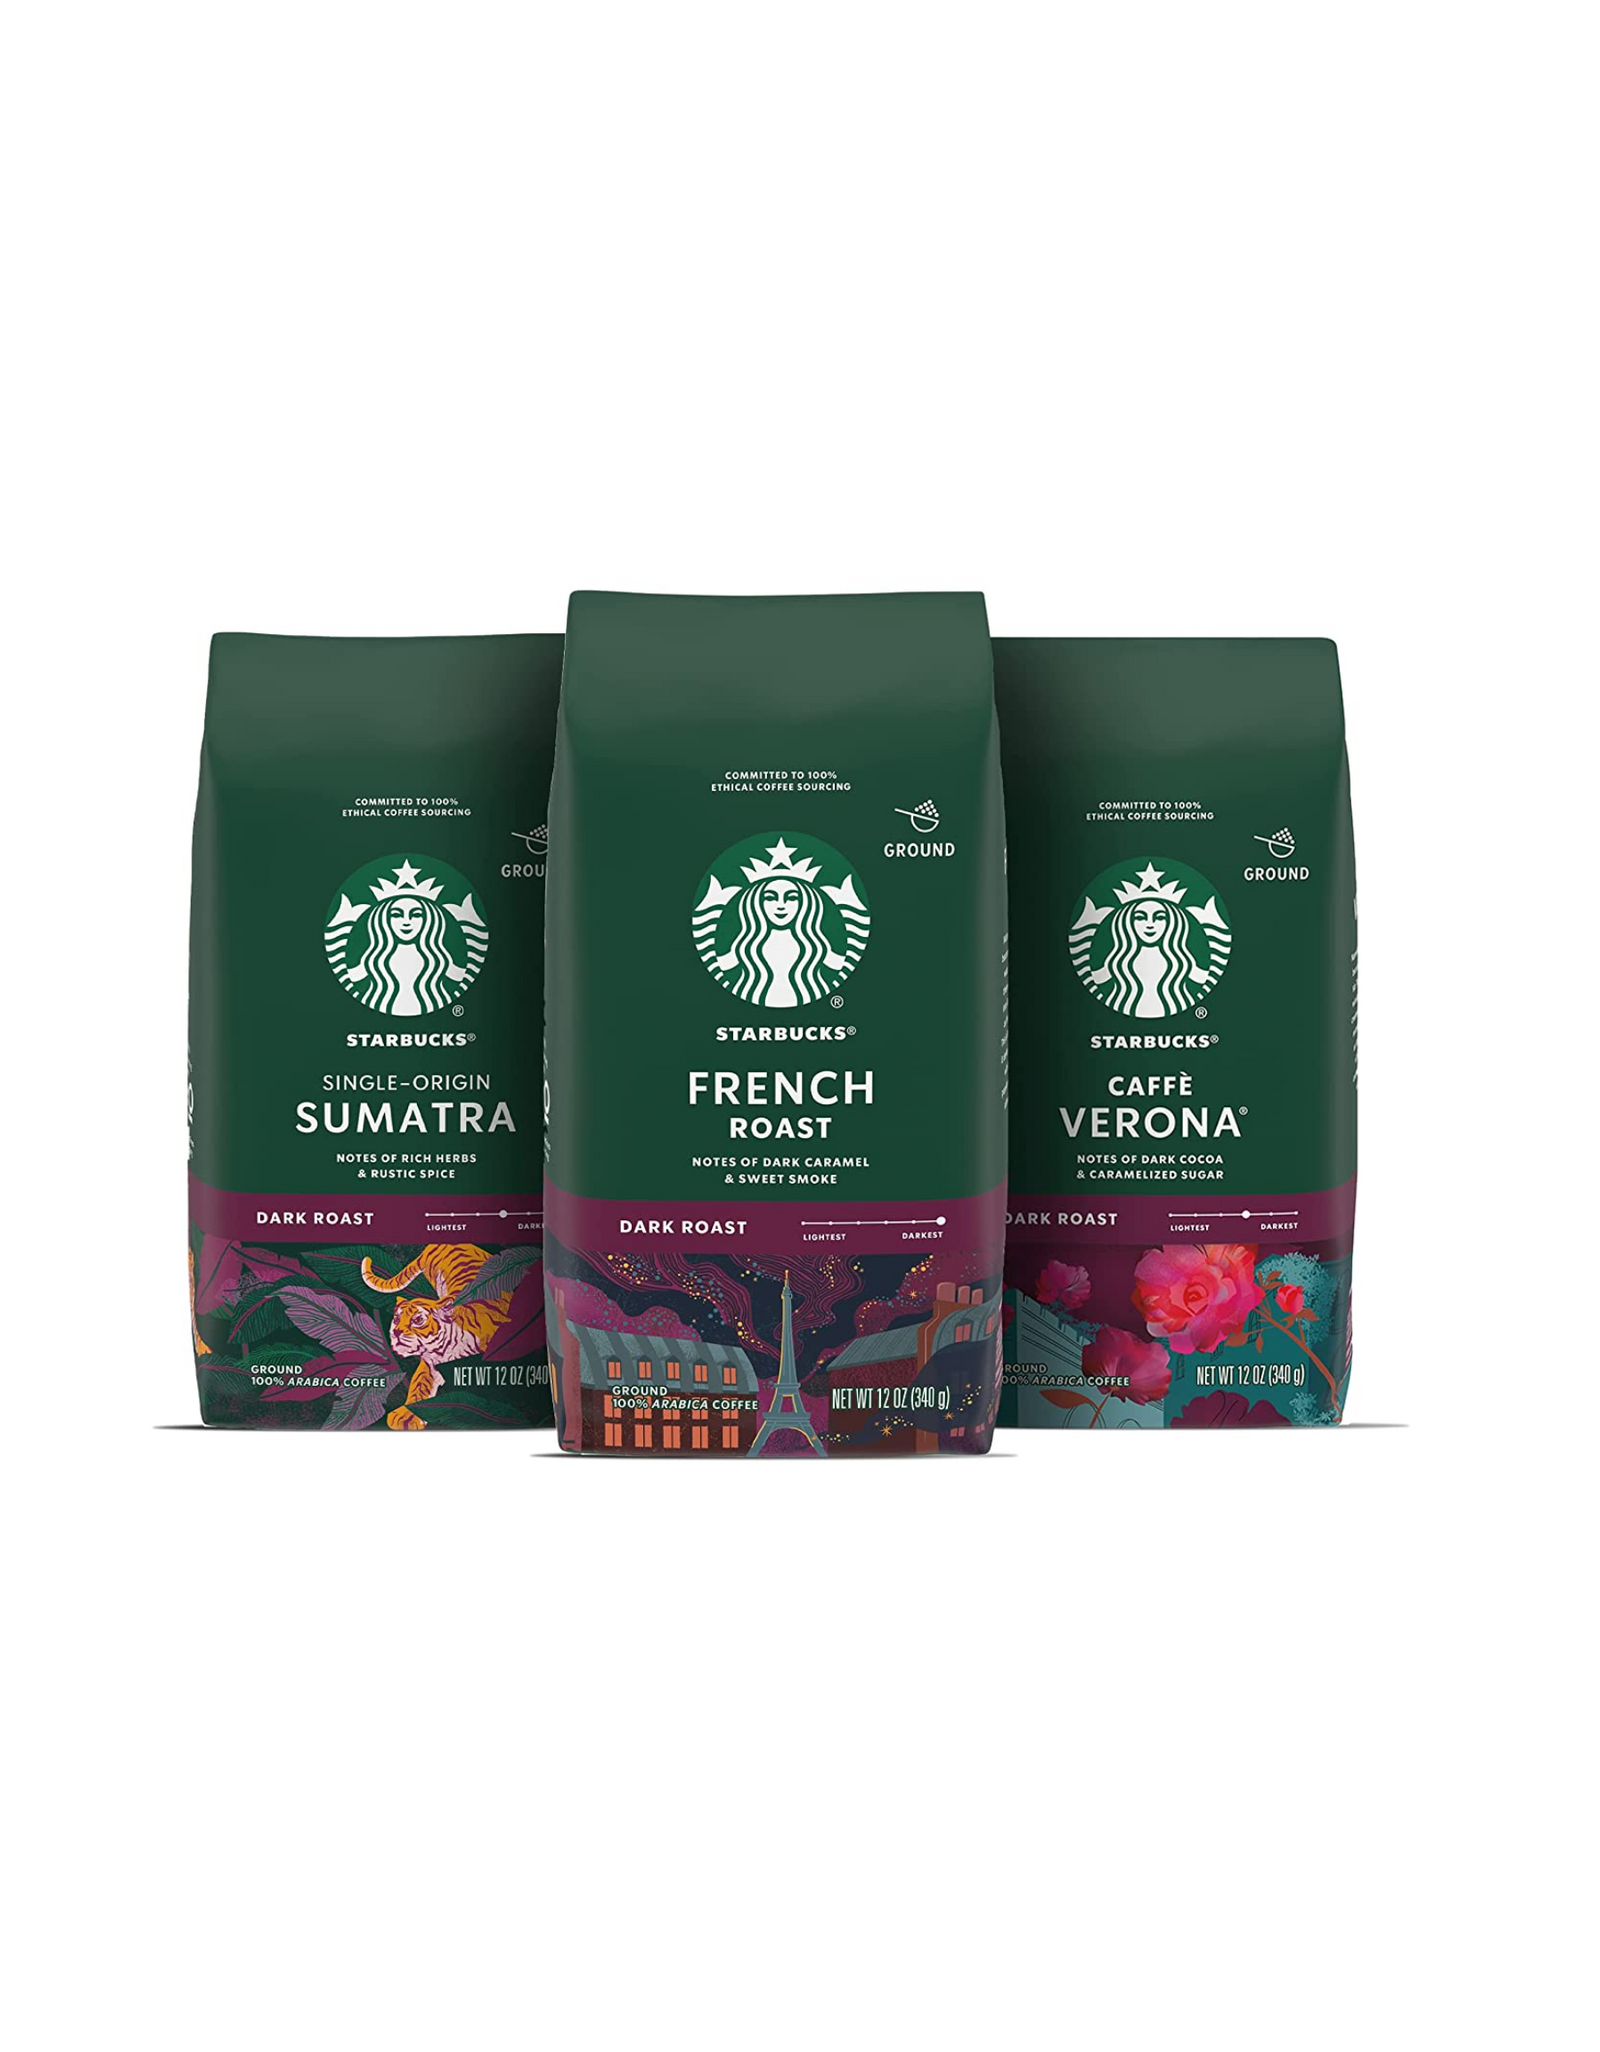 Starbucks Dark Roast Ground Coffee Variety Pack, Ground 100% Arabica Coffee, 3 bags (12 oz each)